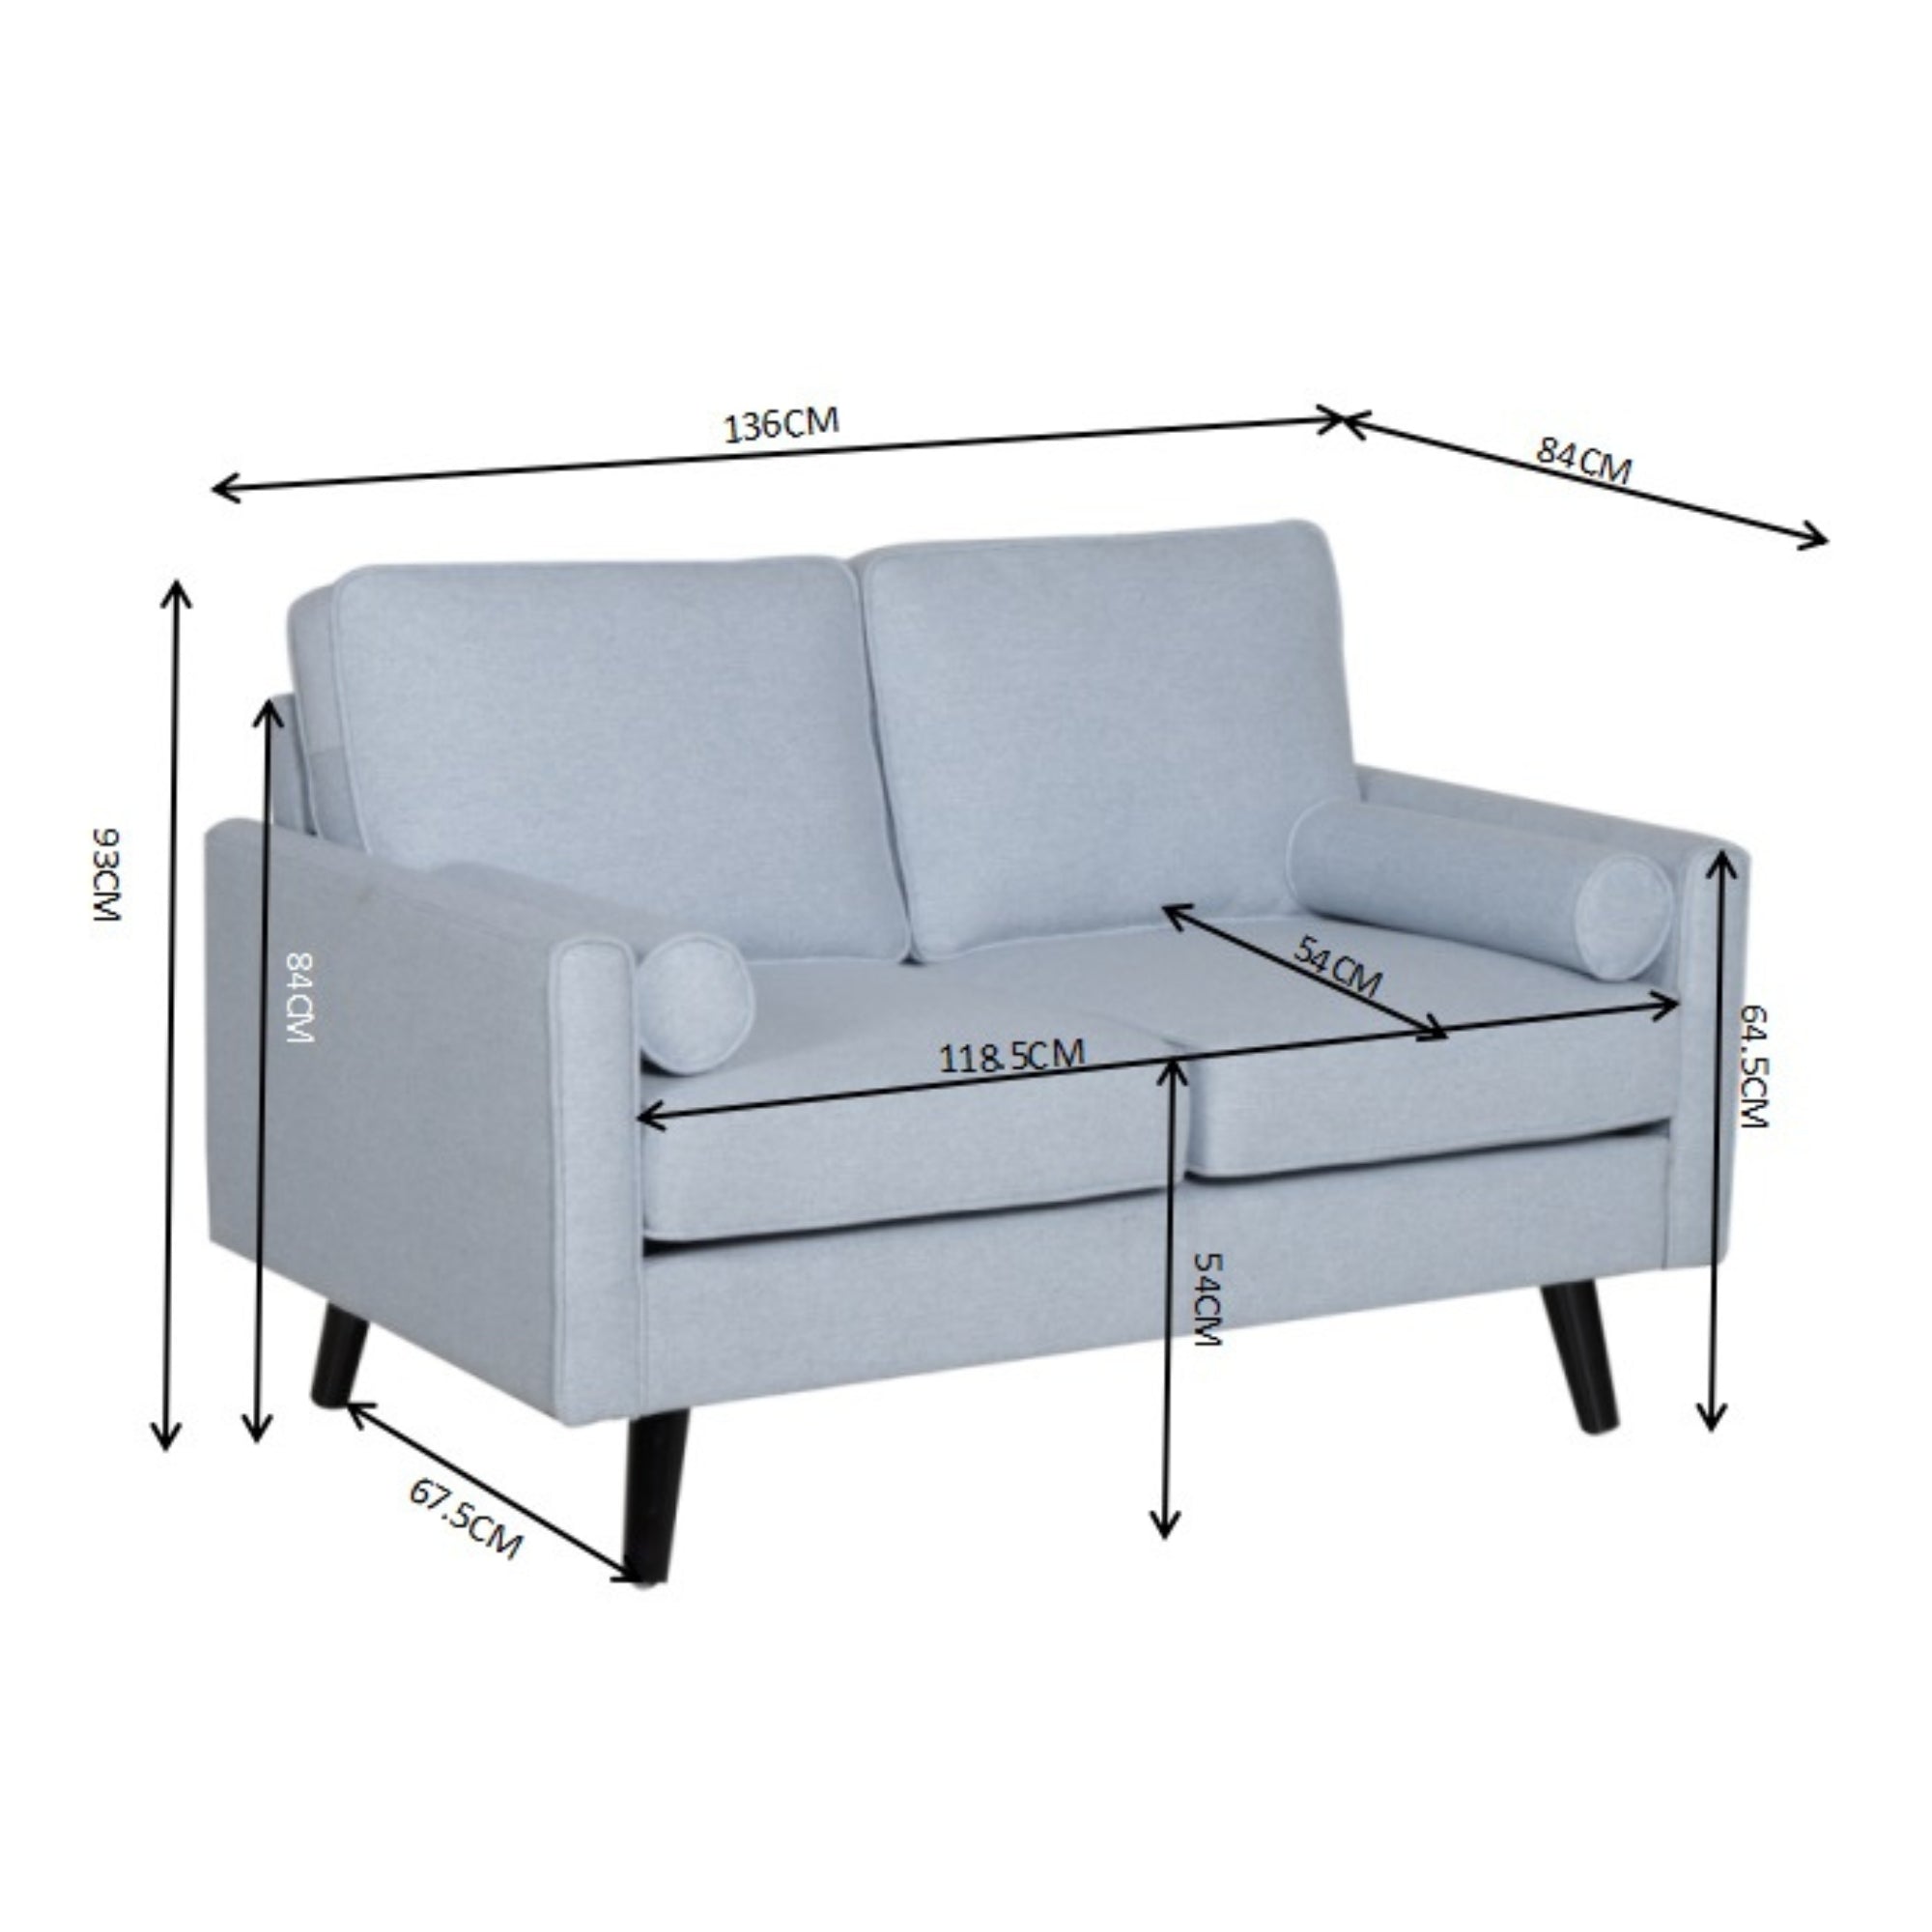 Plush 2-Seater Fabric Sofa, Light Blue, Compact, Scandinavian